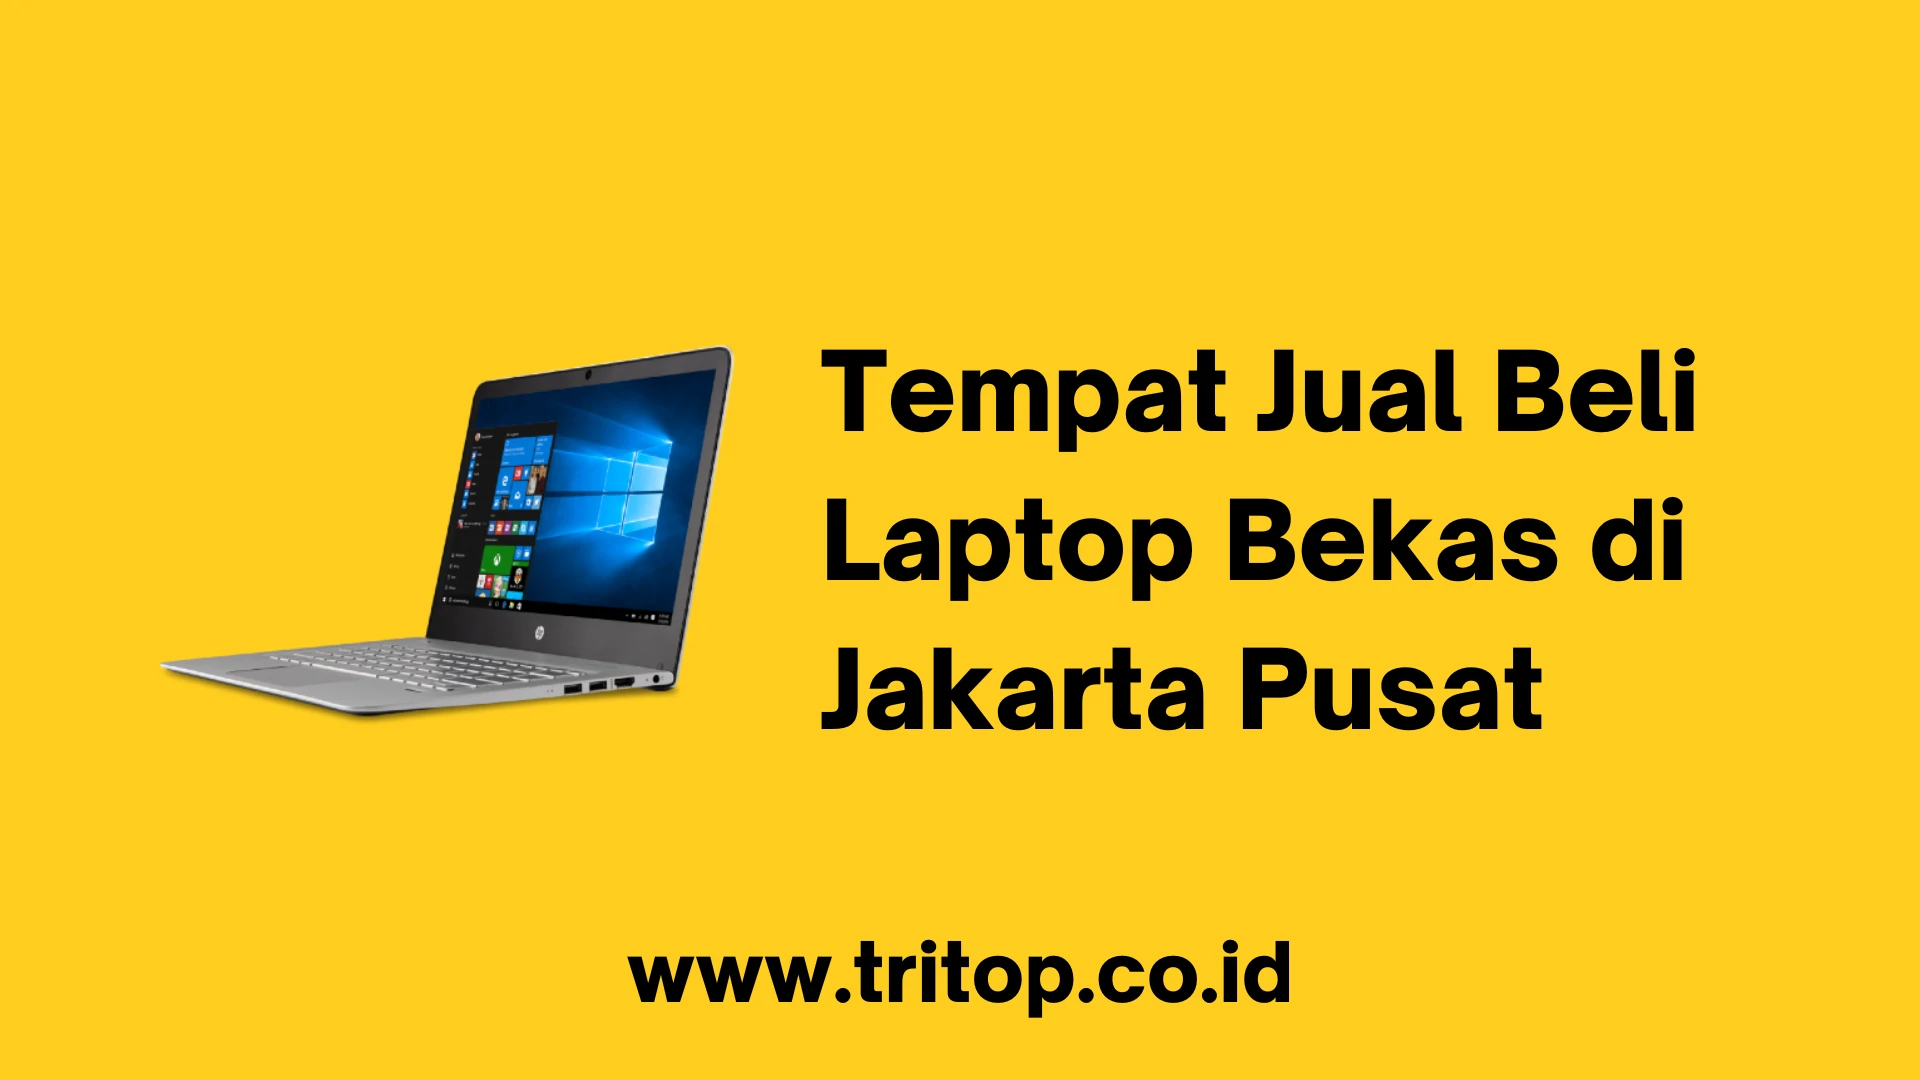 Tempat Jual Beli Laptop Bekas di Jakarta Pusat